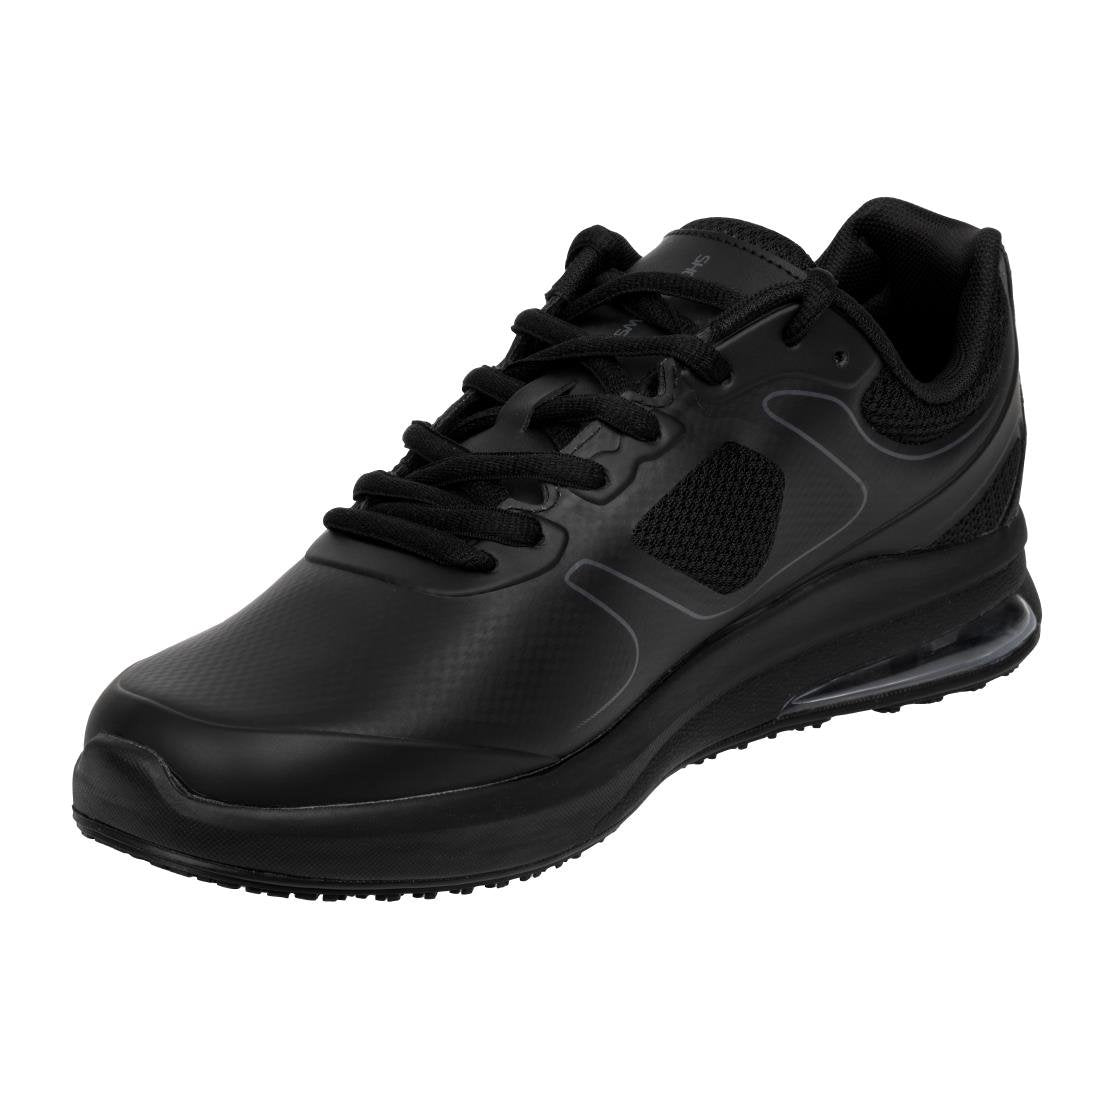 BB586-43 Shoes for Crews Men's Evolution Trainers Black Size 43